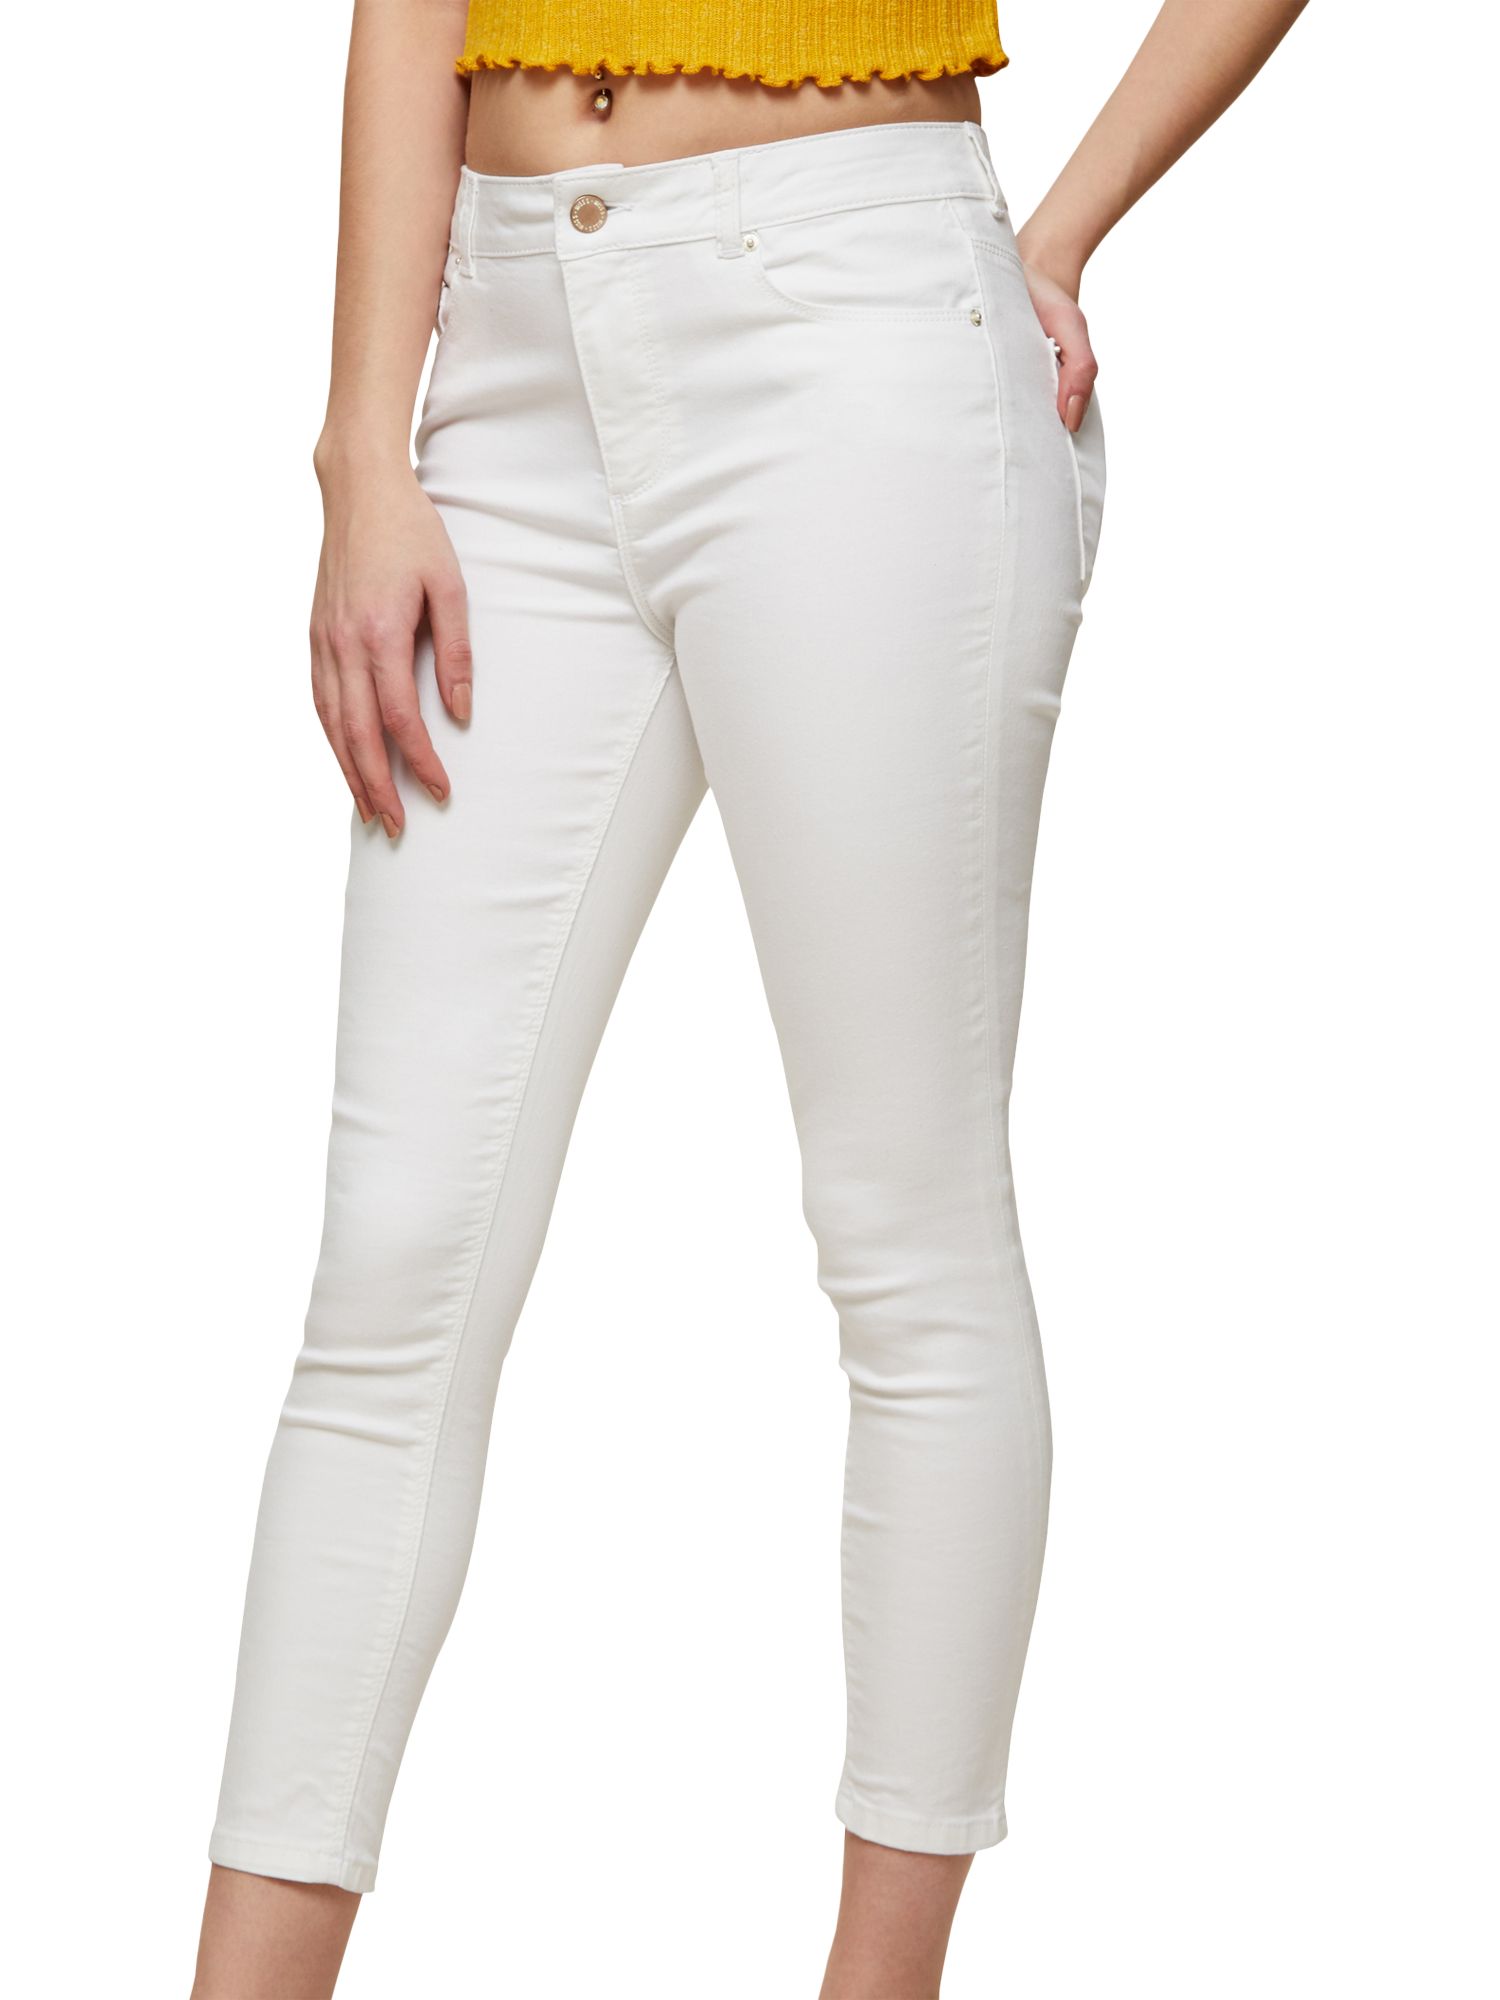 petite white denim jeans